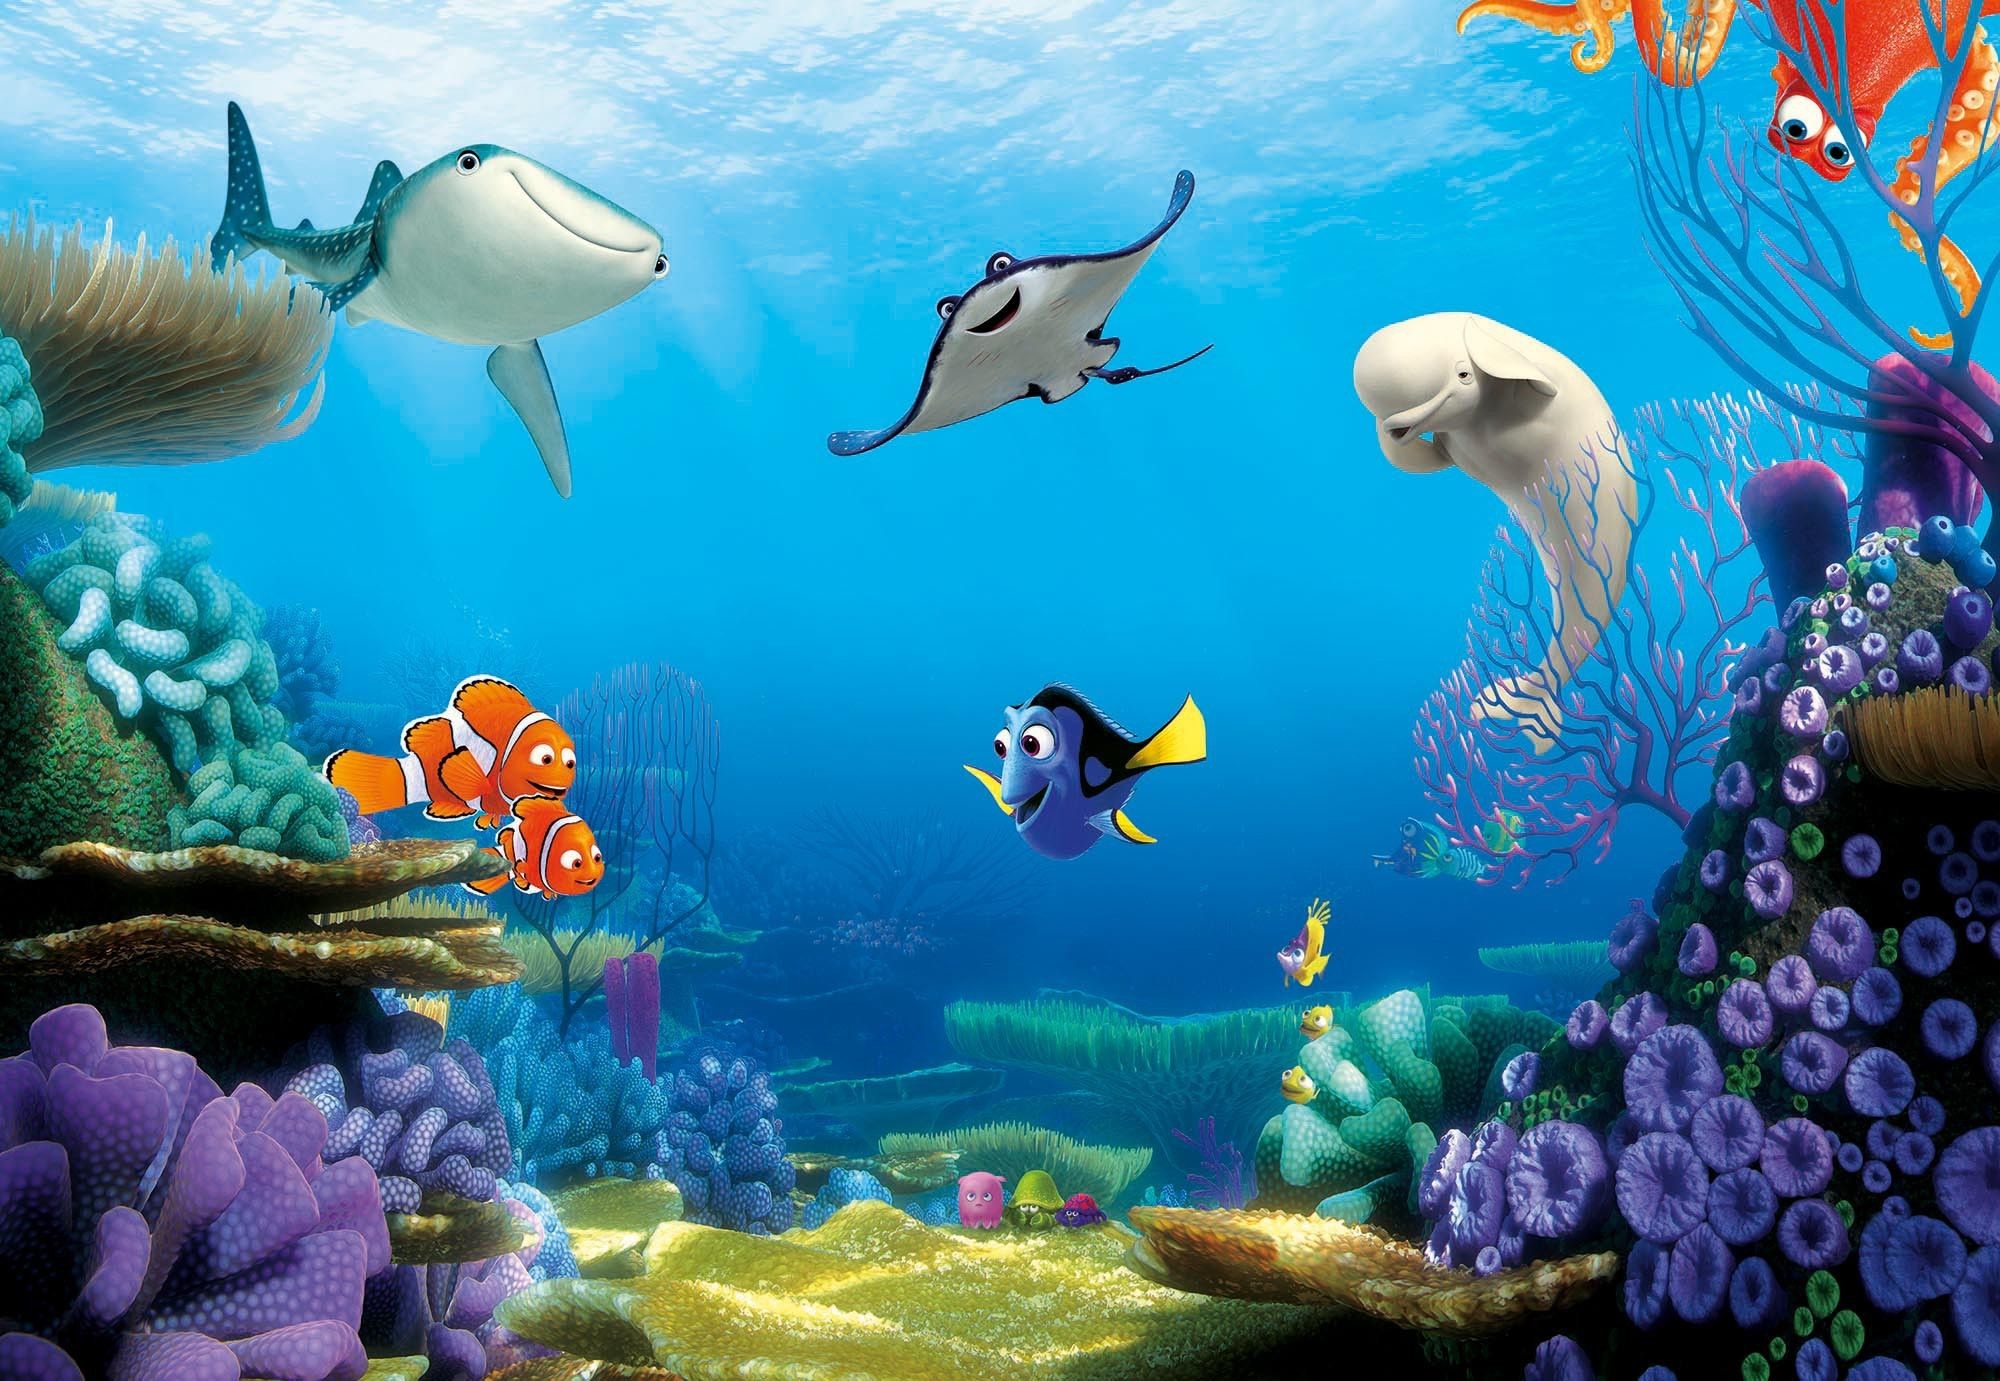 Finding Nemo  Disney wallpaper Disney screensaver Wallpaper iphone disney